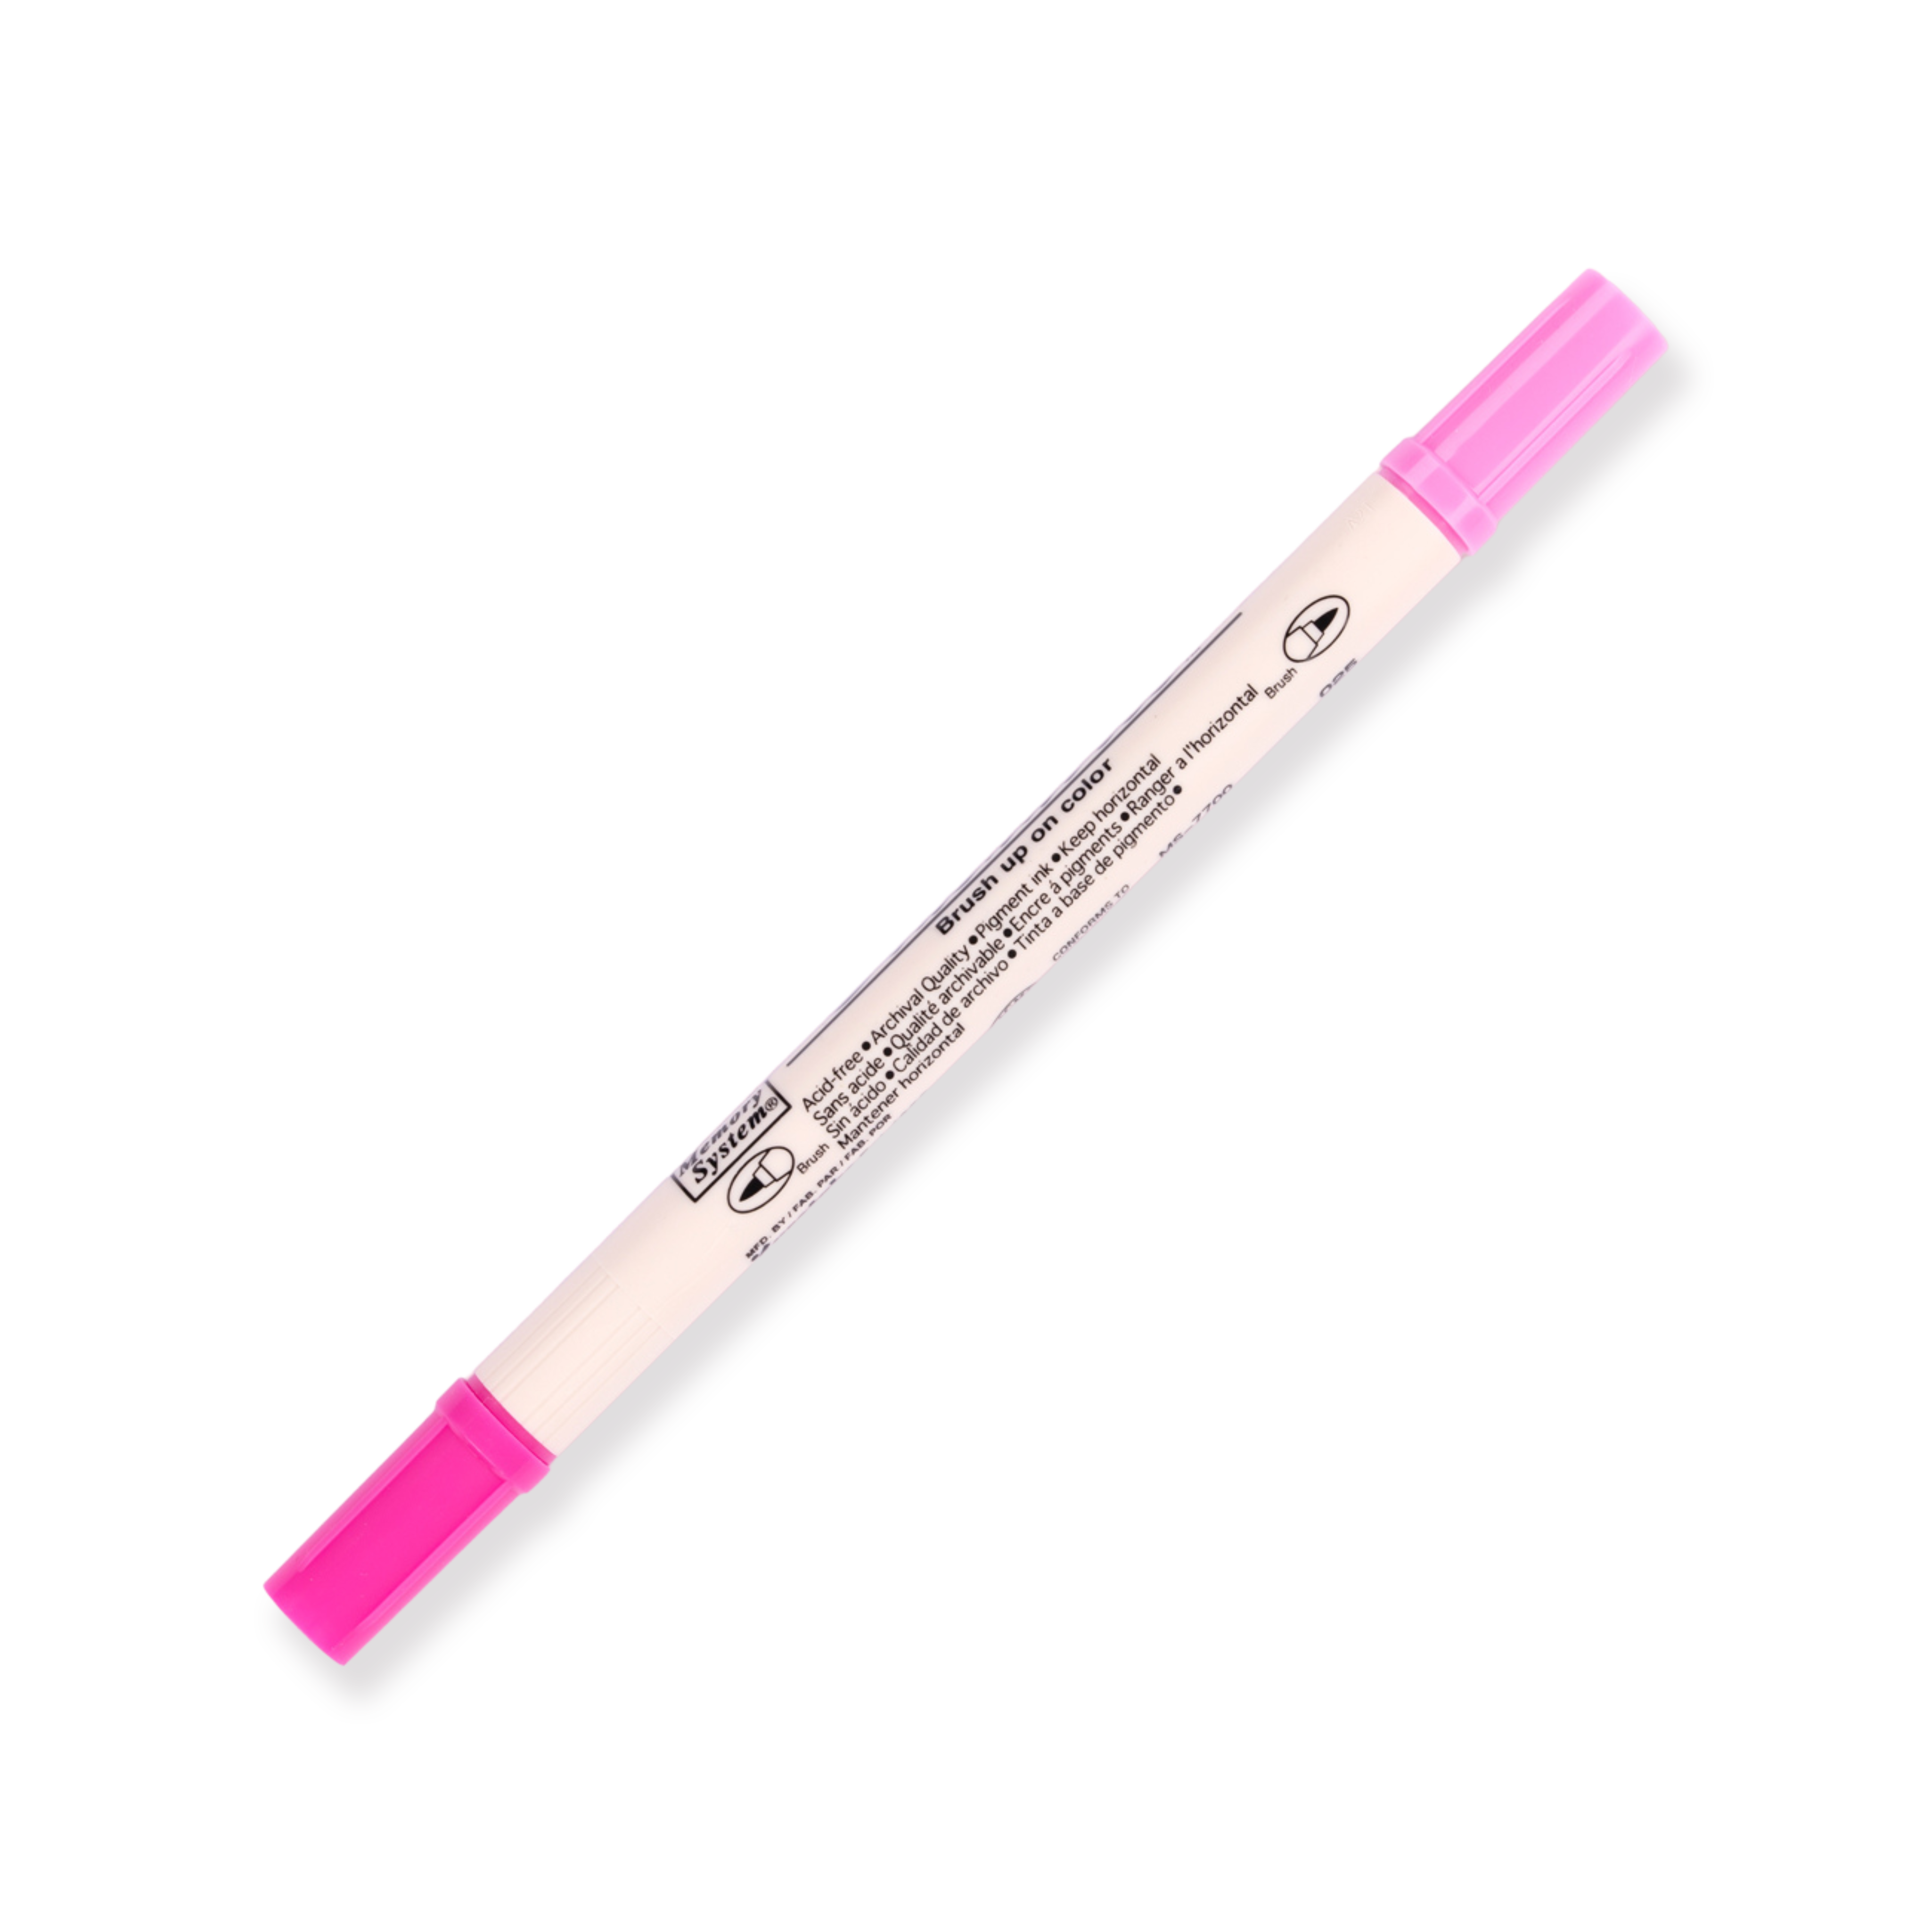 Kuretake Zig Brushables Brush Pen - Pure Pink 025